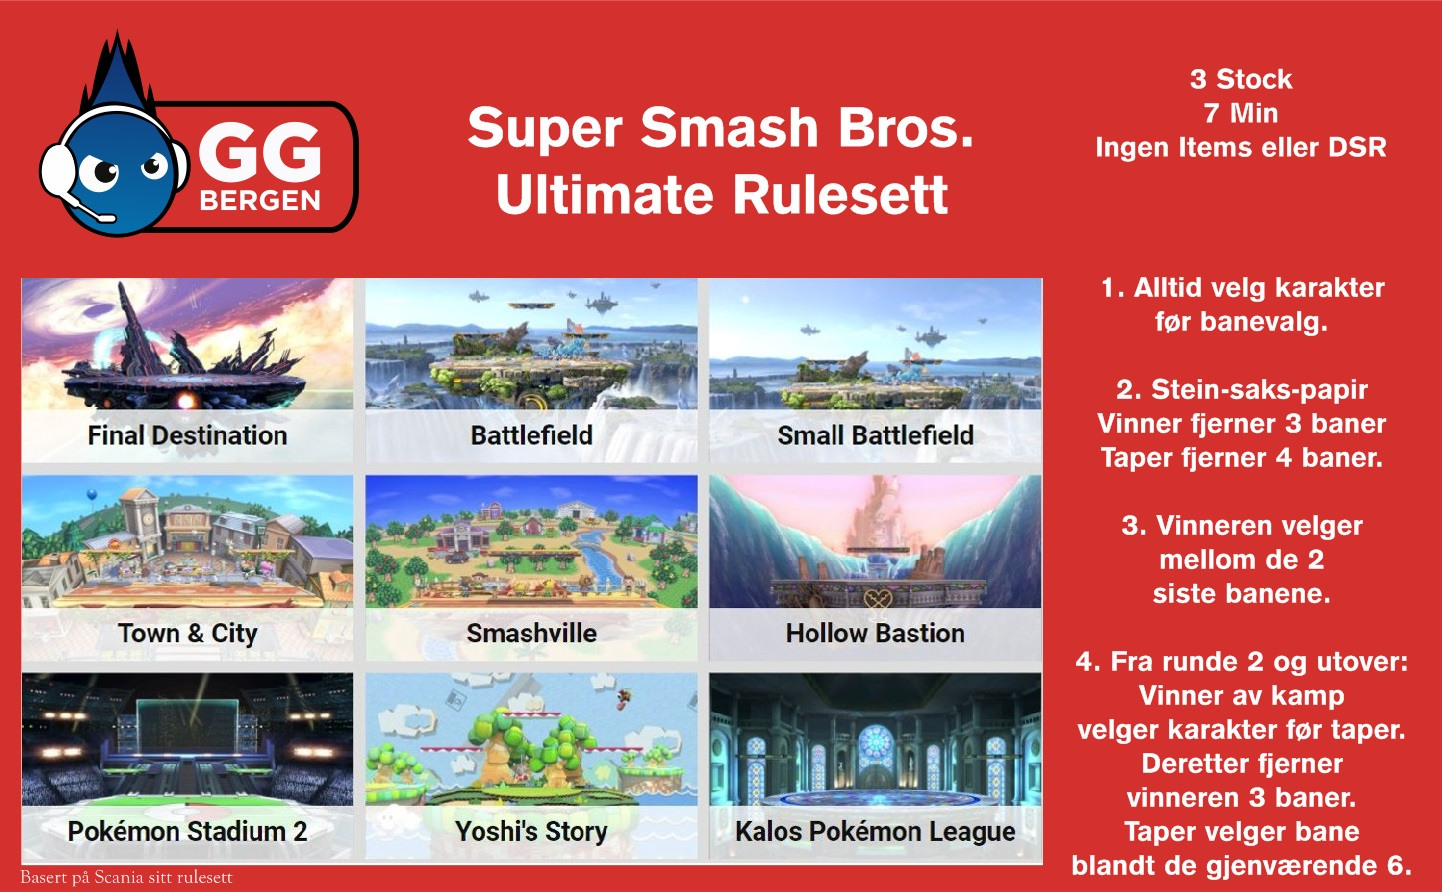 GG Bergen Super Smash Bros Ultimate Ruleset